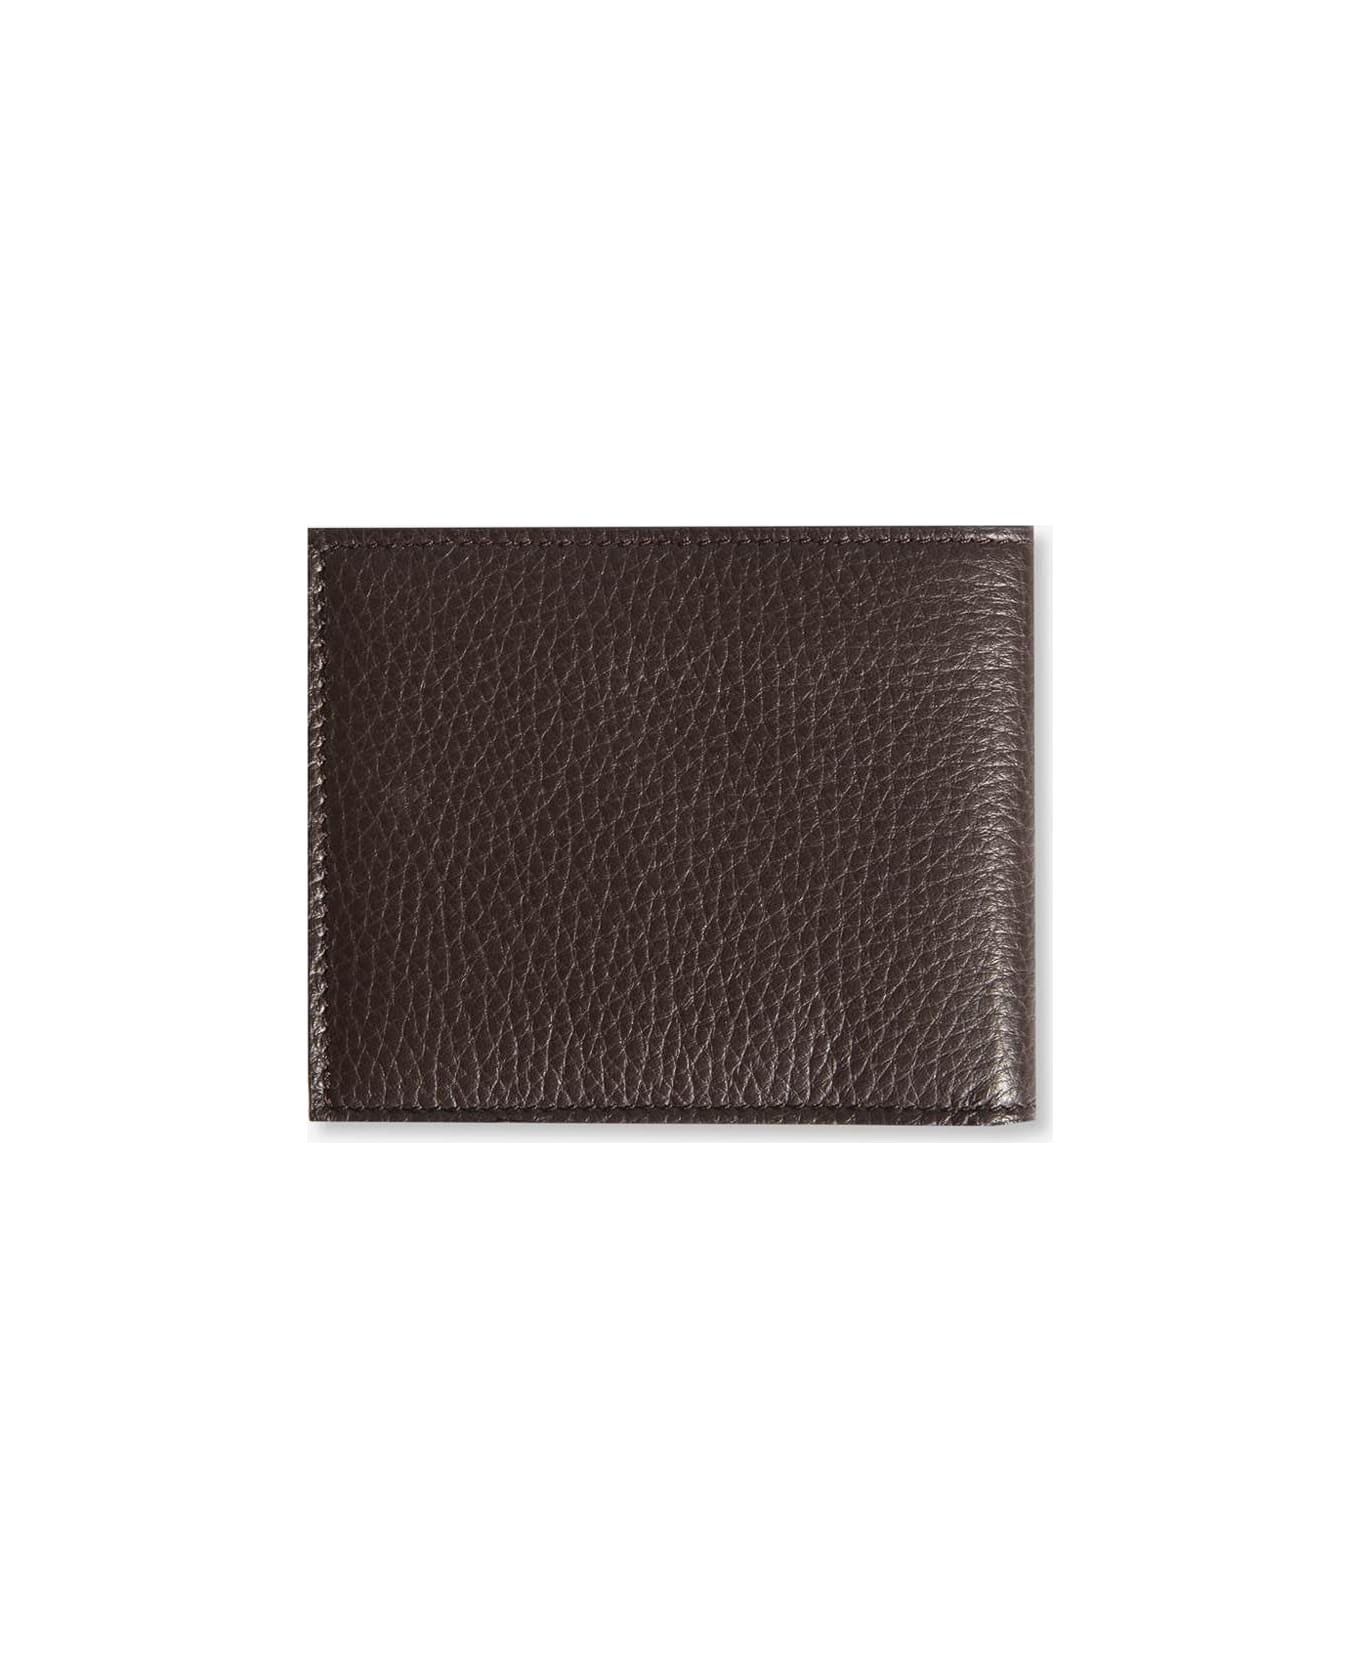 Larusmiani Wallet 'euro' Wallet - Chocolate 財布